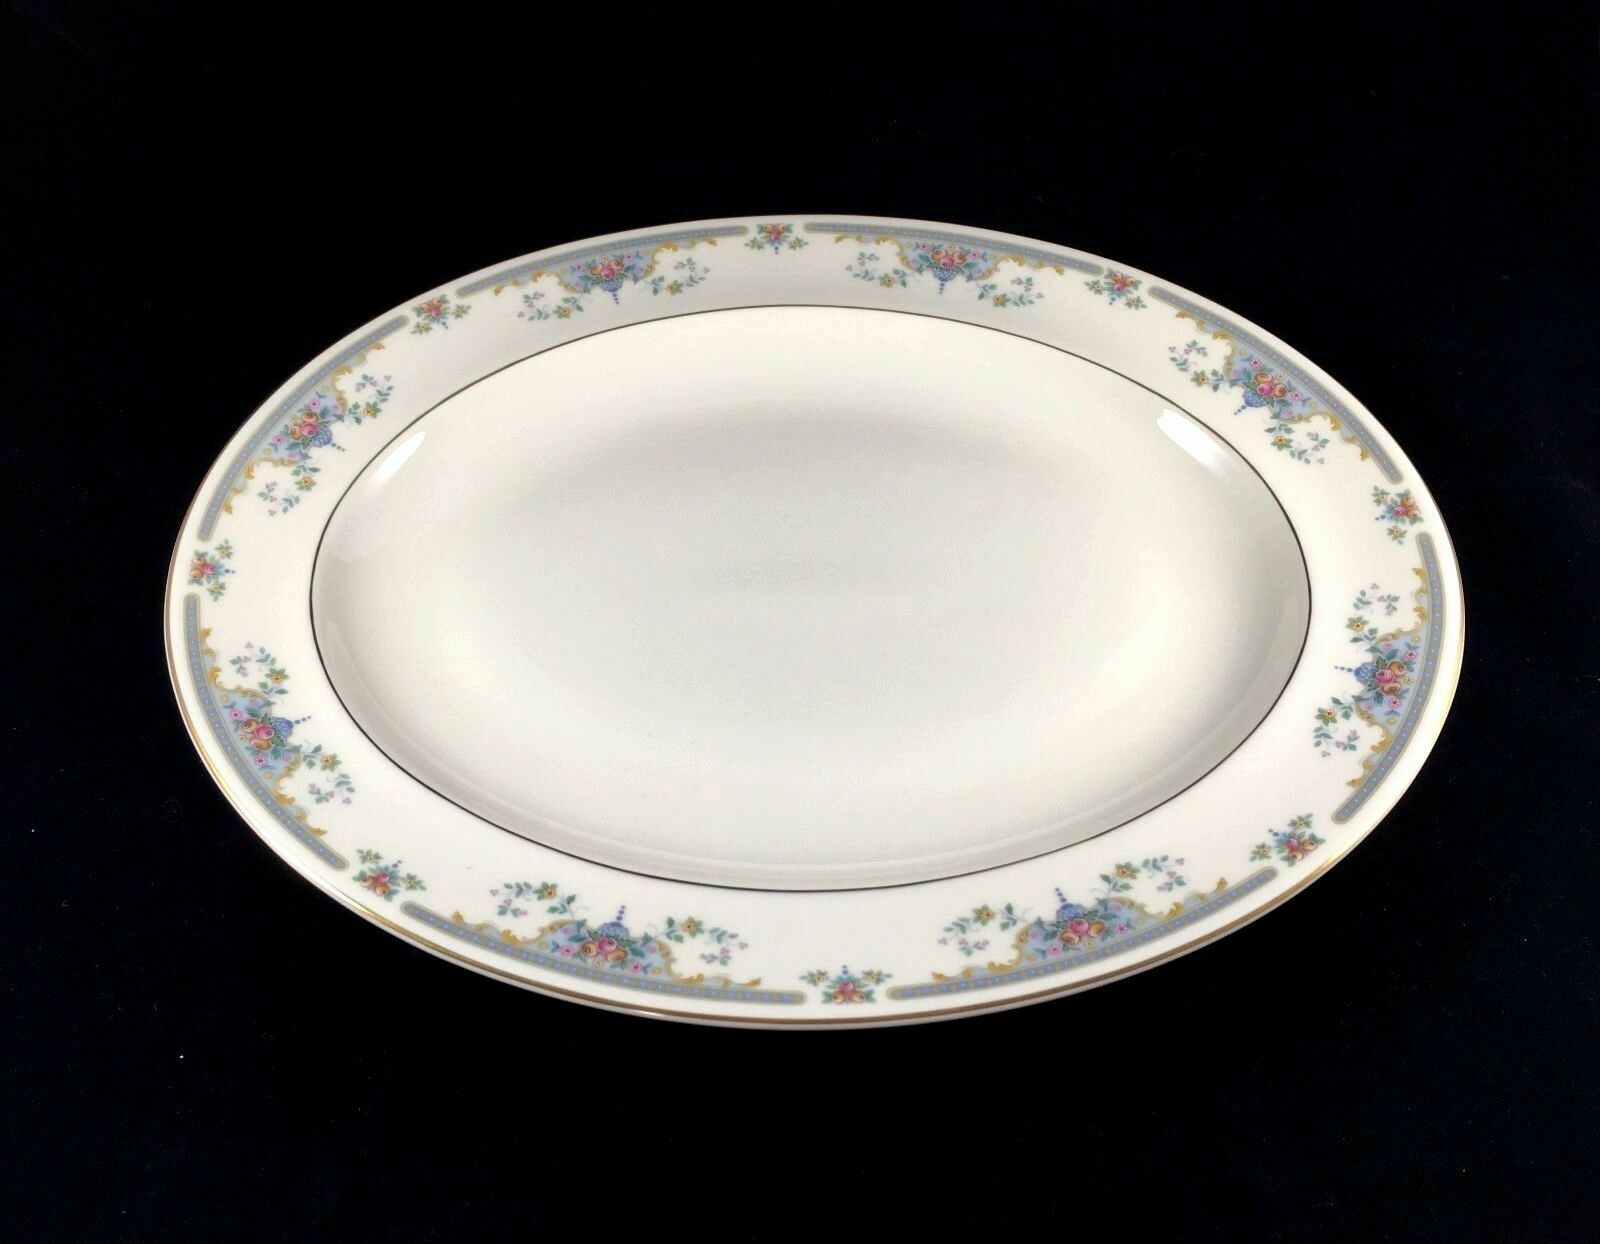 New 1981 Royal Doulton Juliet Oval Serving Dish Platter Romance Vtg Wedding Gift